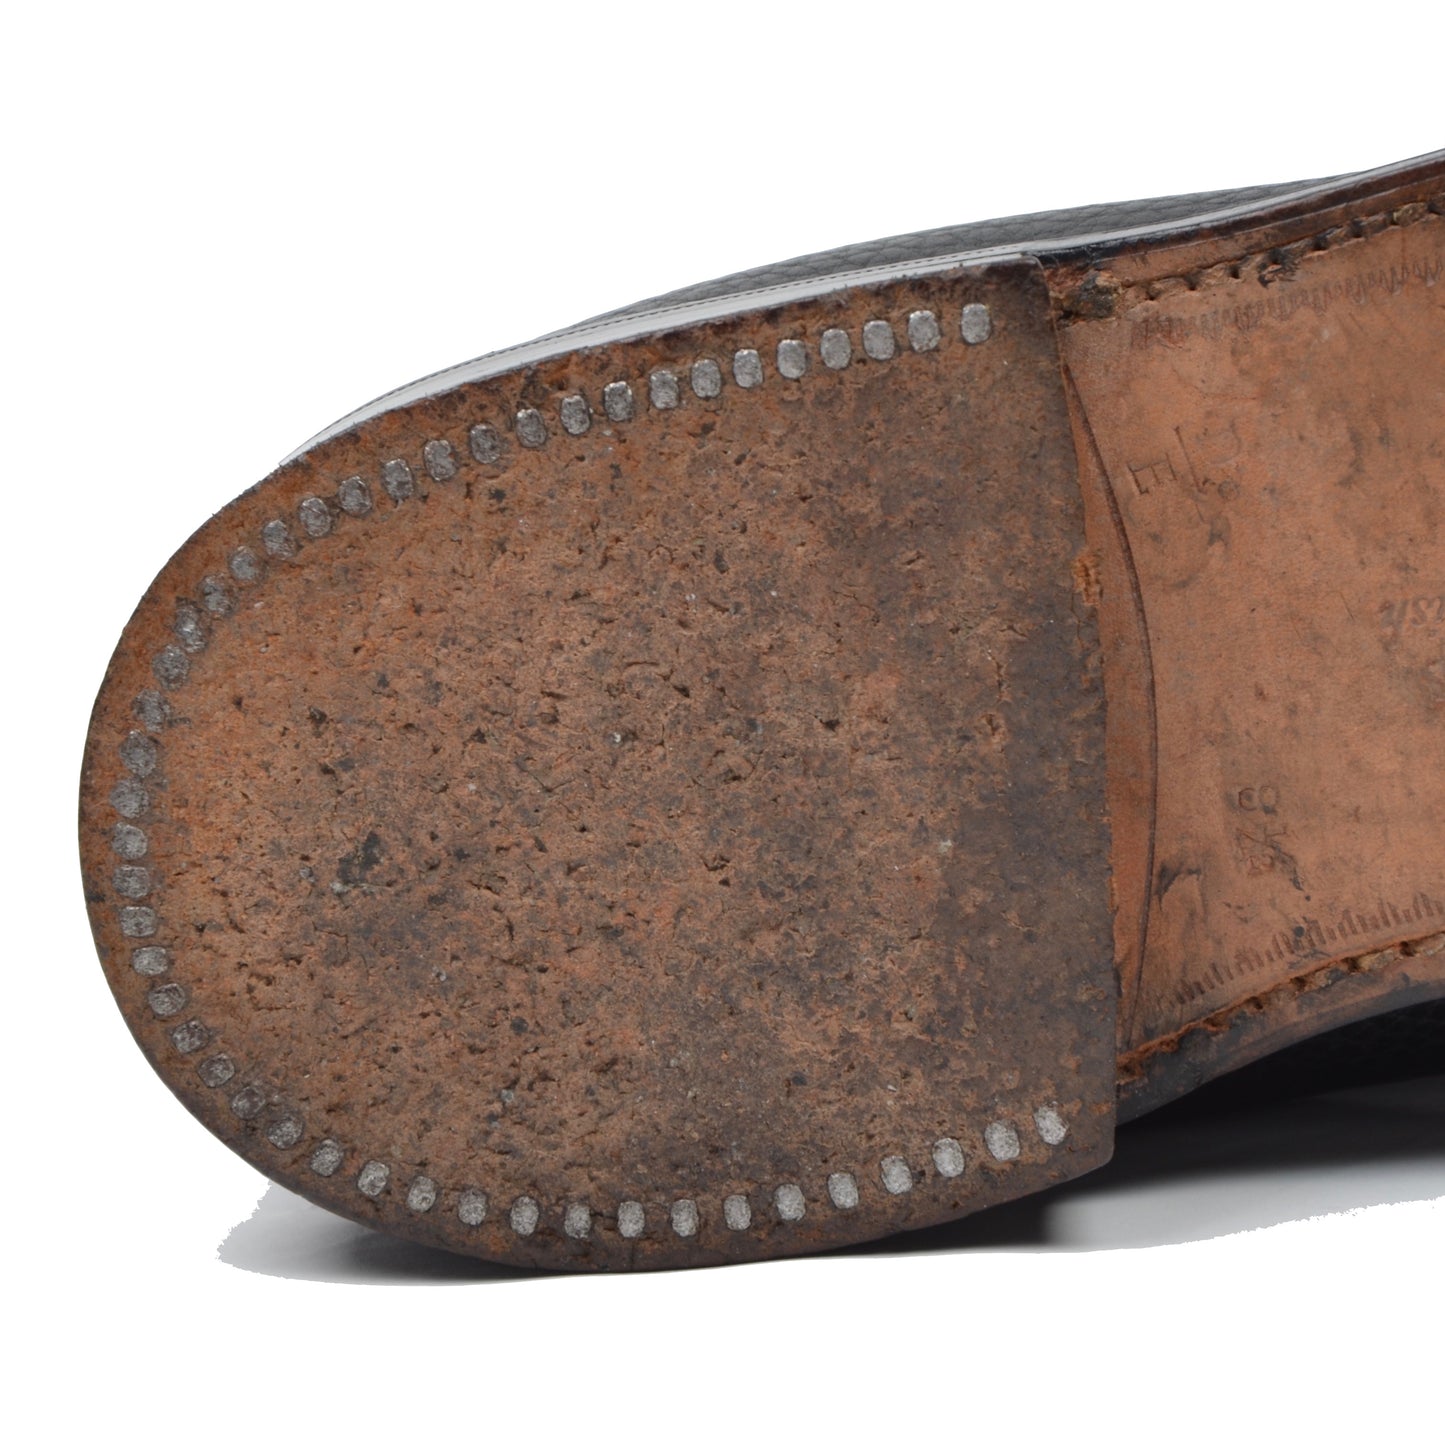 Vintage Church's Ranch Oxhide Chukka Boots Size 8.5 D/E - Black